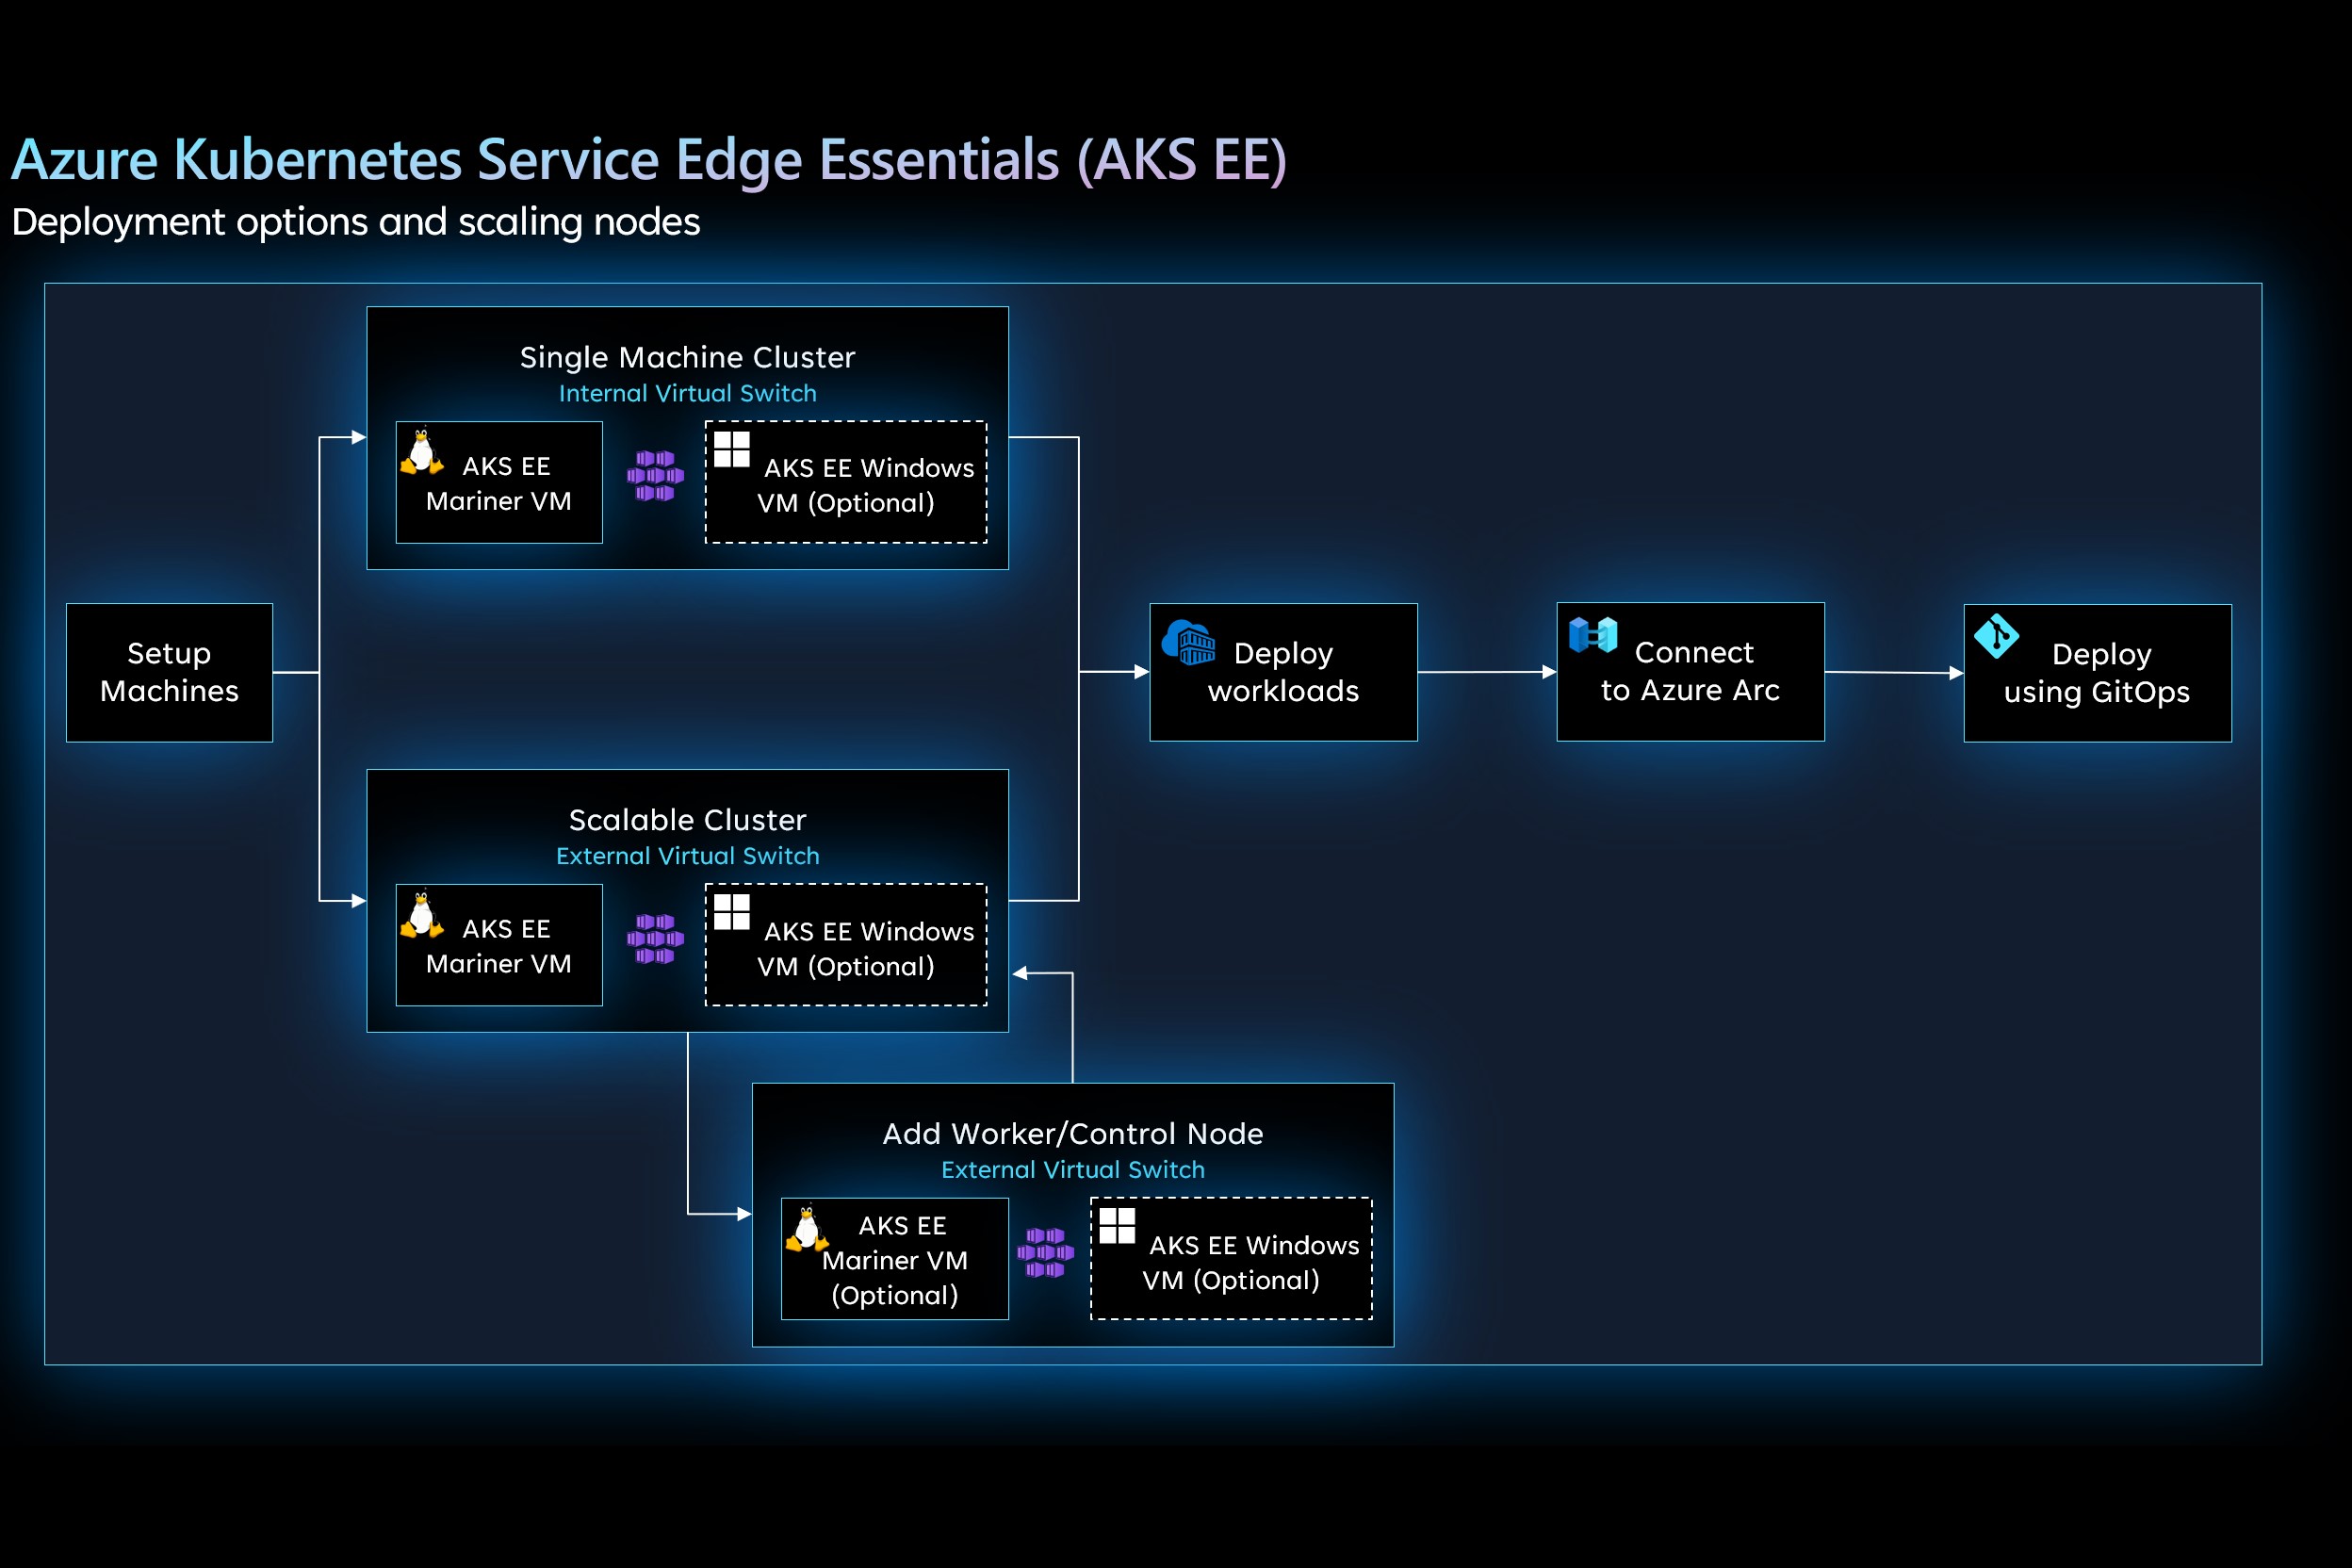 显示 AKS Edge Essentials 部署方案的示意图。